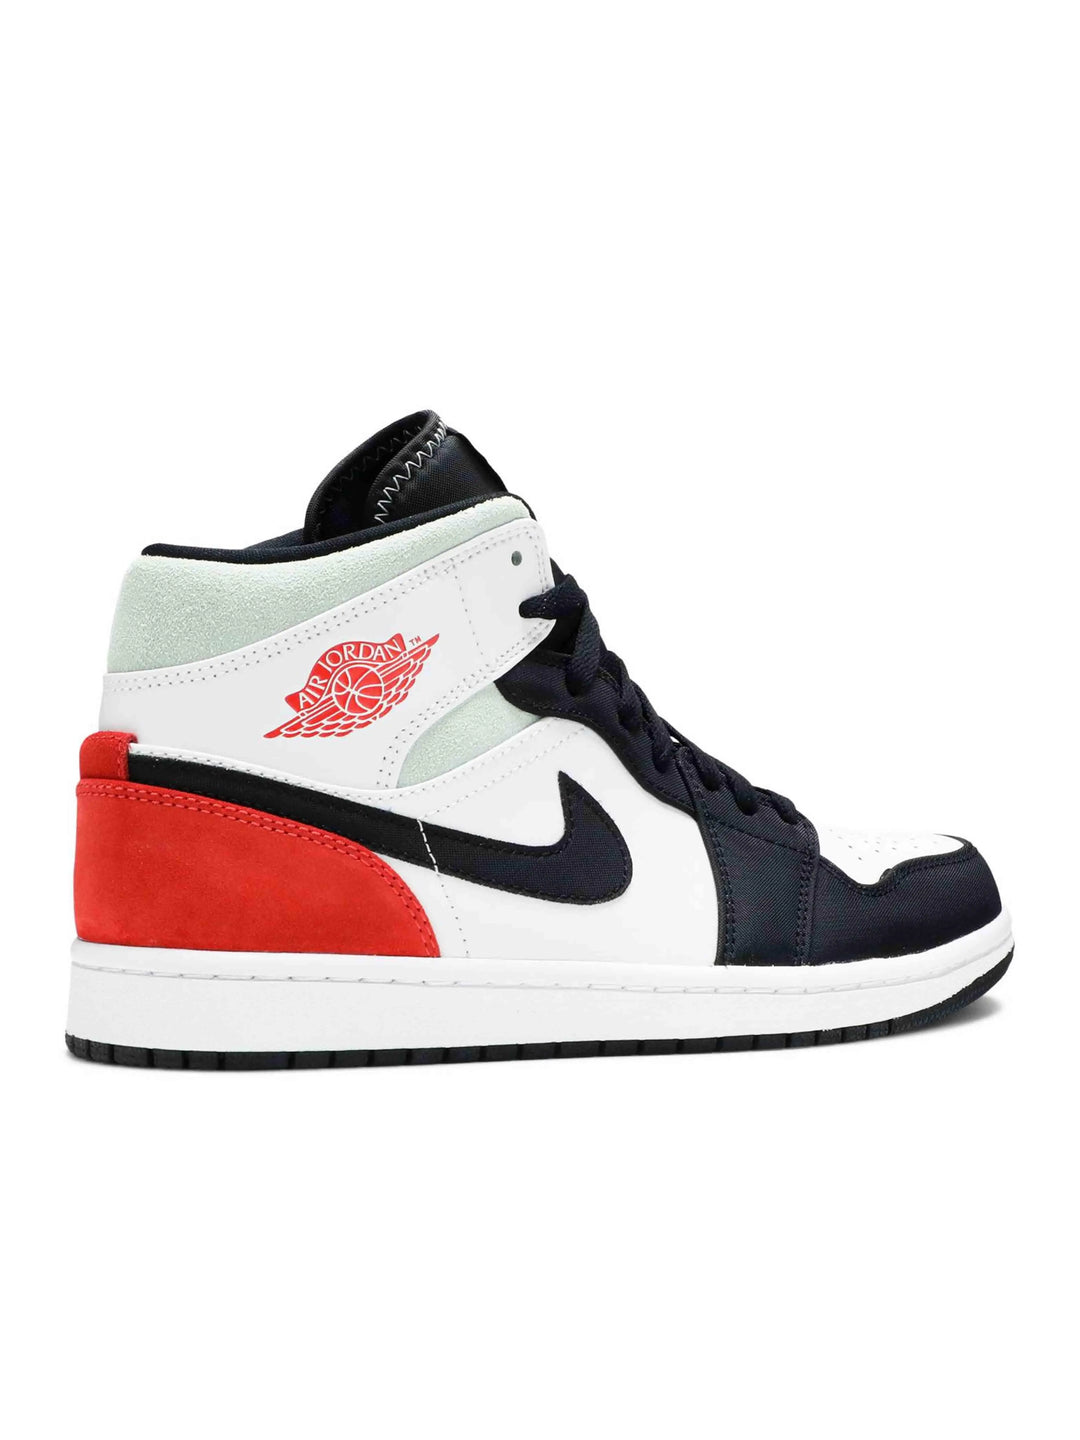 Nike Air Jordan 1 Mid Red 'Union Black Toe' (GS) Jordan Brand